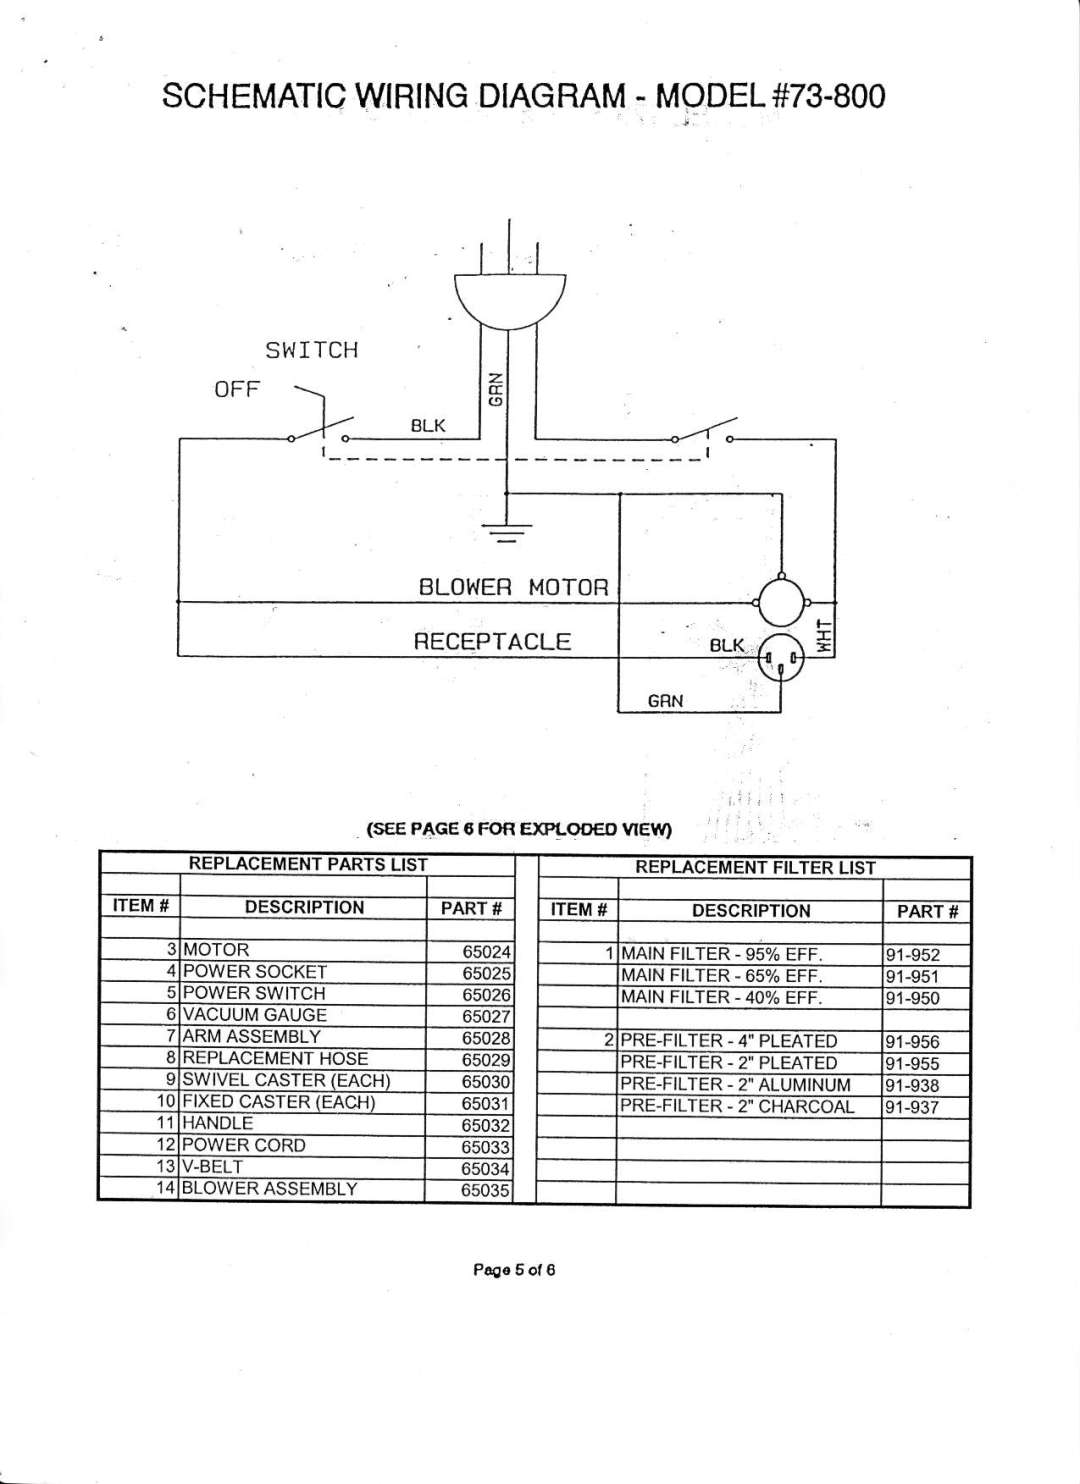 Associated Equipment manual SCHEMATICWIRINGDIAGRAMMODEL#73-800, S W I T C H, 6s029, 13V-BELT, 6503s 